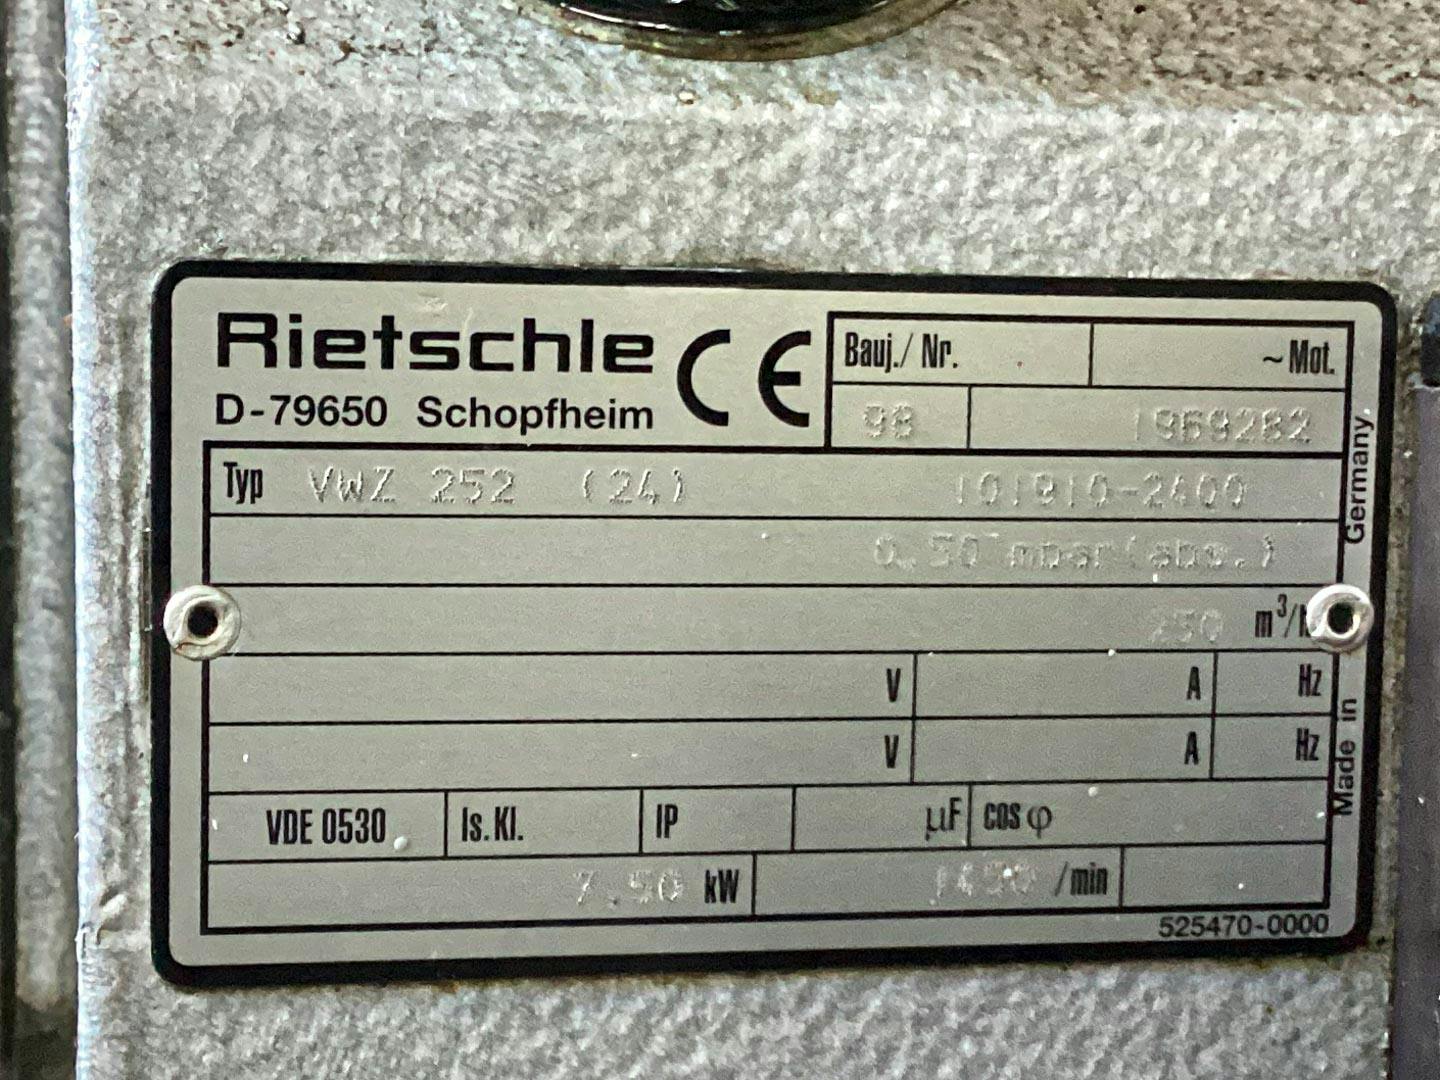 Rietschle VWZ 252 (24) - Vacuum pump - image 7